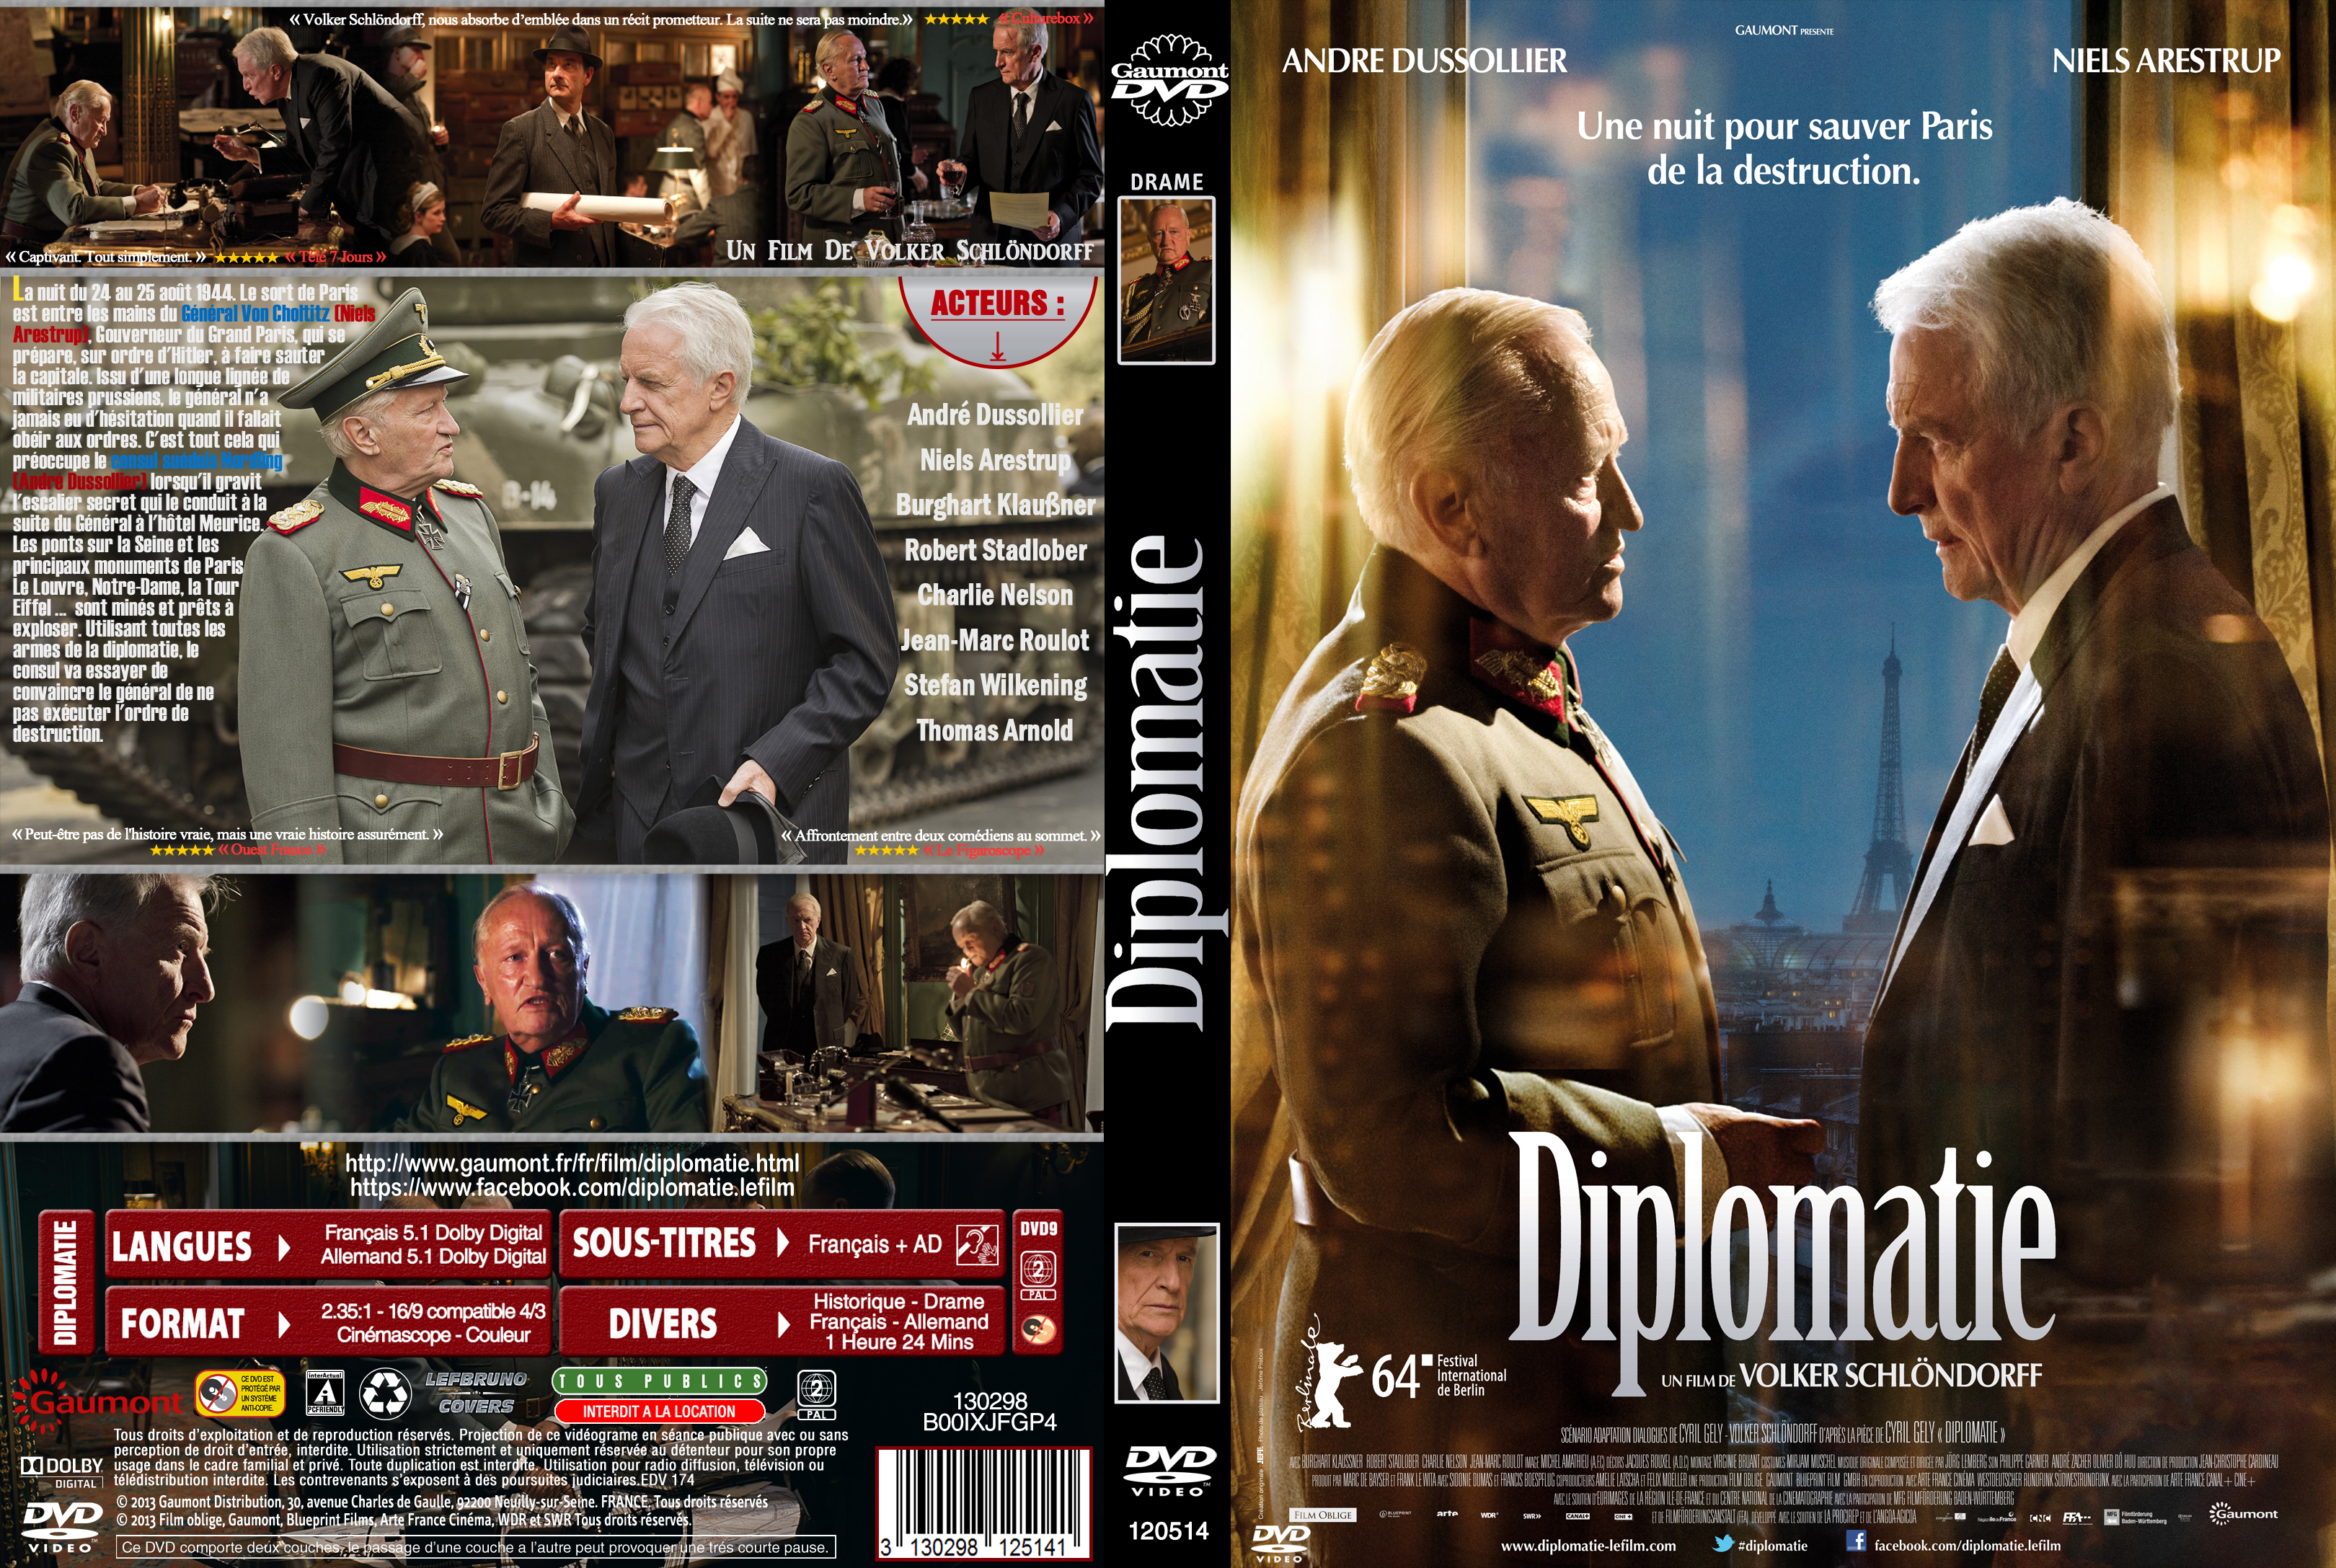 Jaquette DVD Diplomatie custom